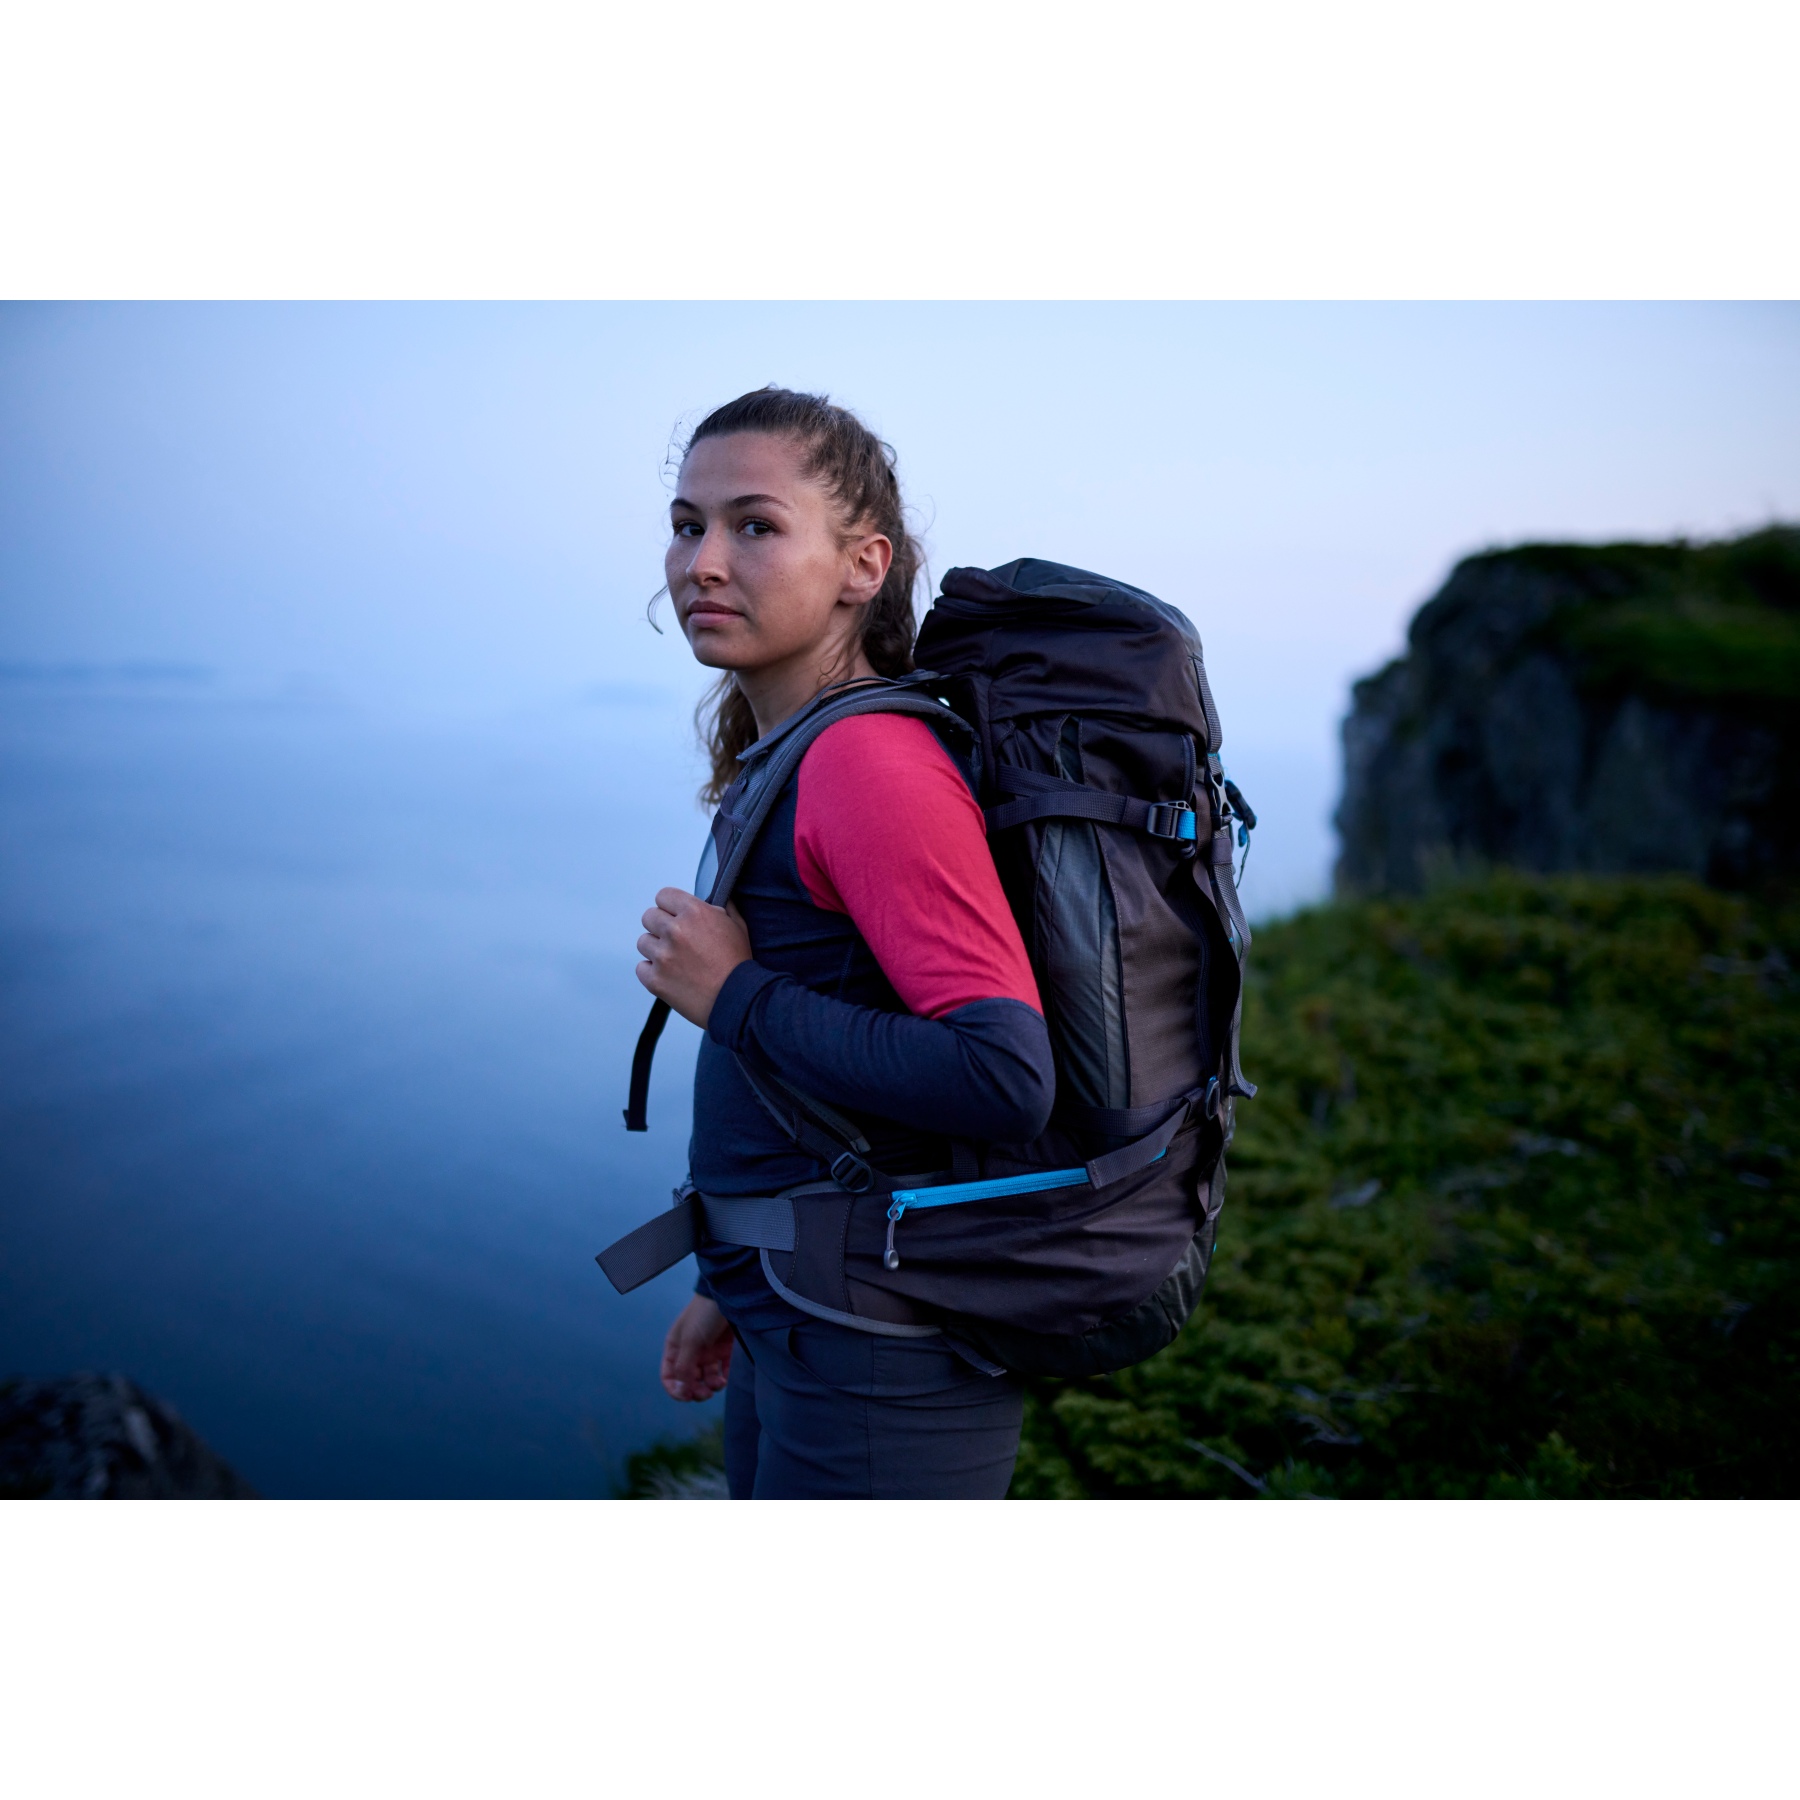 Camiseta Lana Merino Devold Hiking Woman